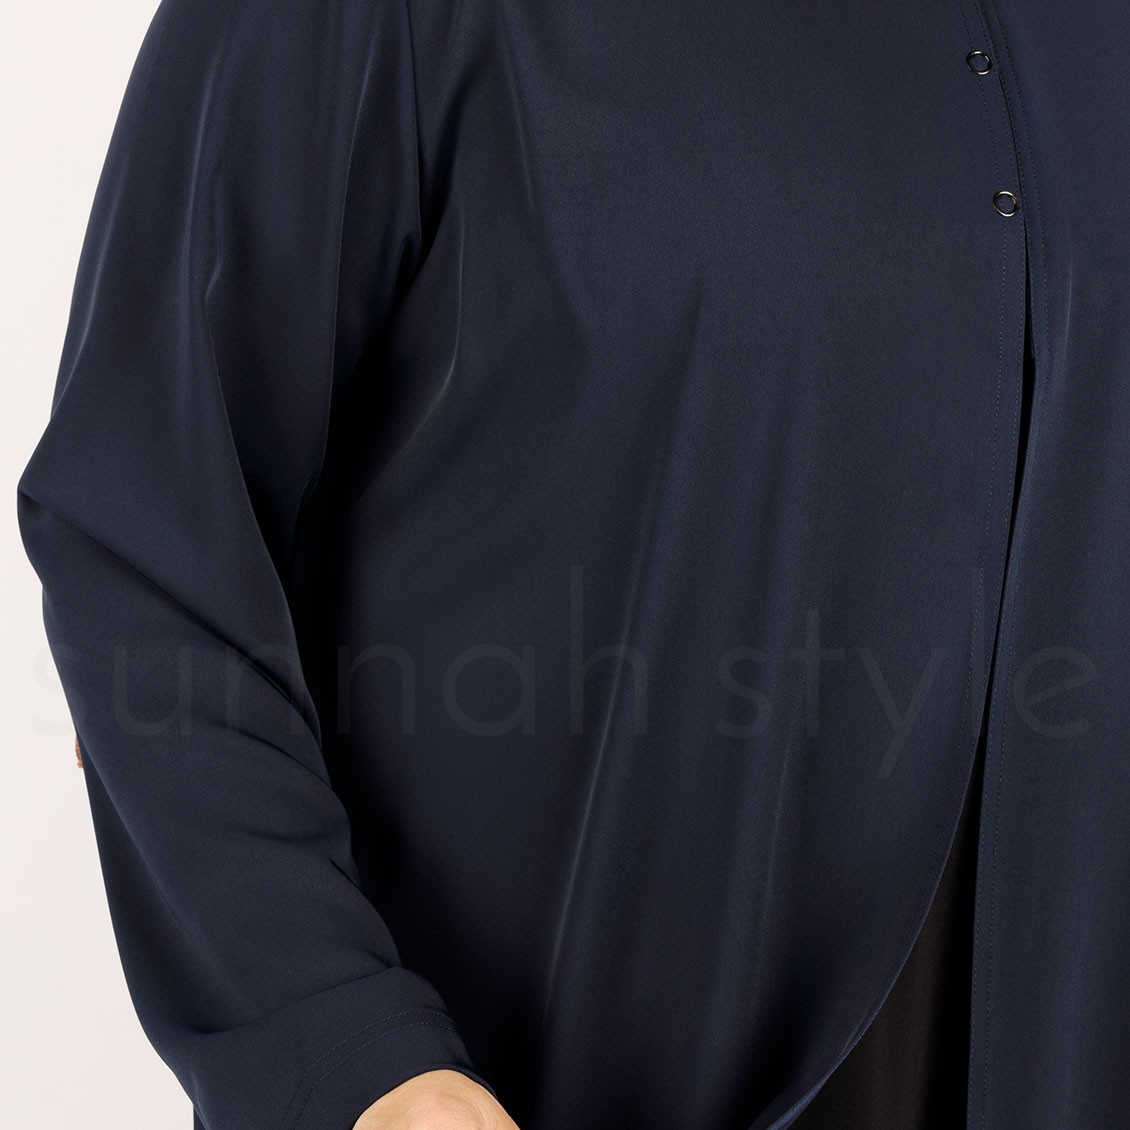 Sunnah Style Classic Robe Navy Blue